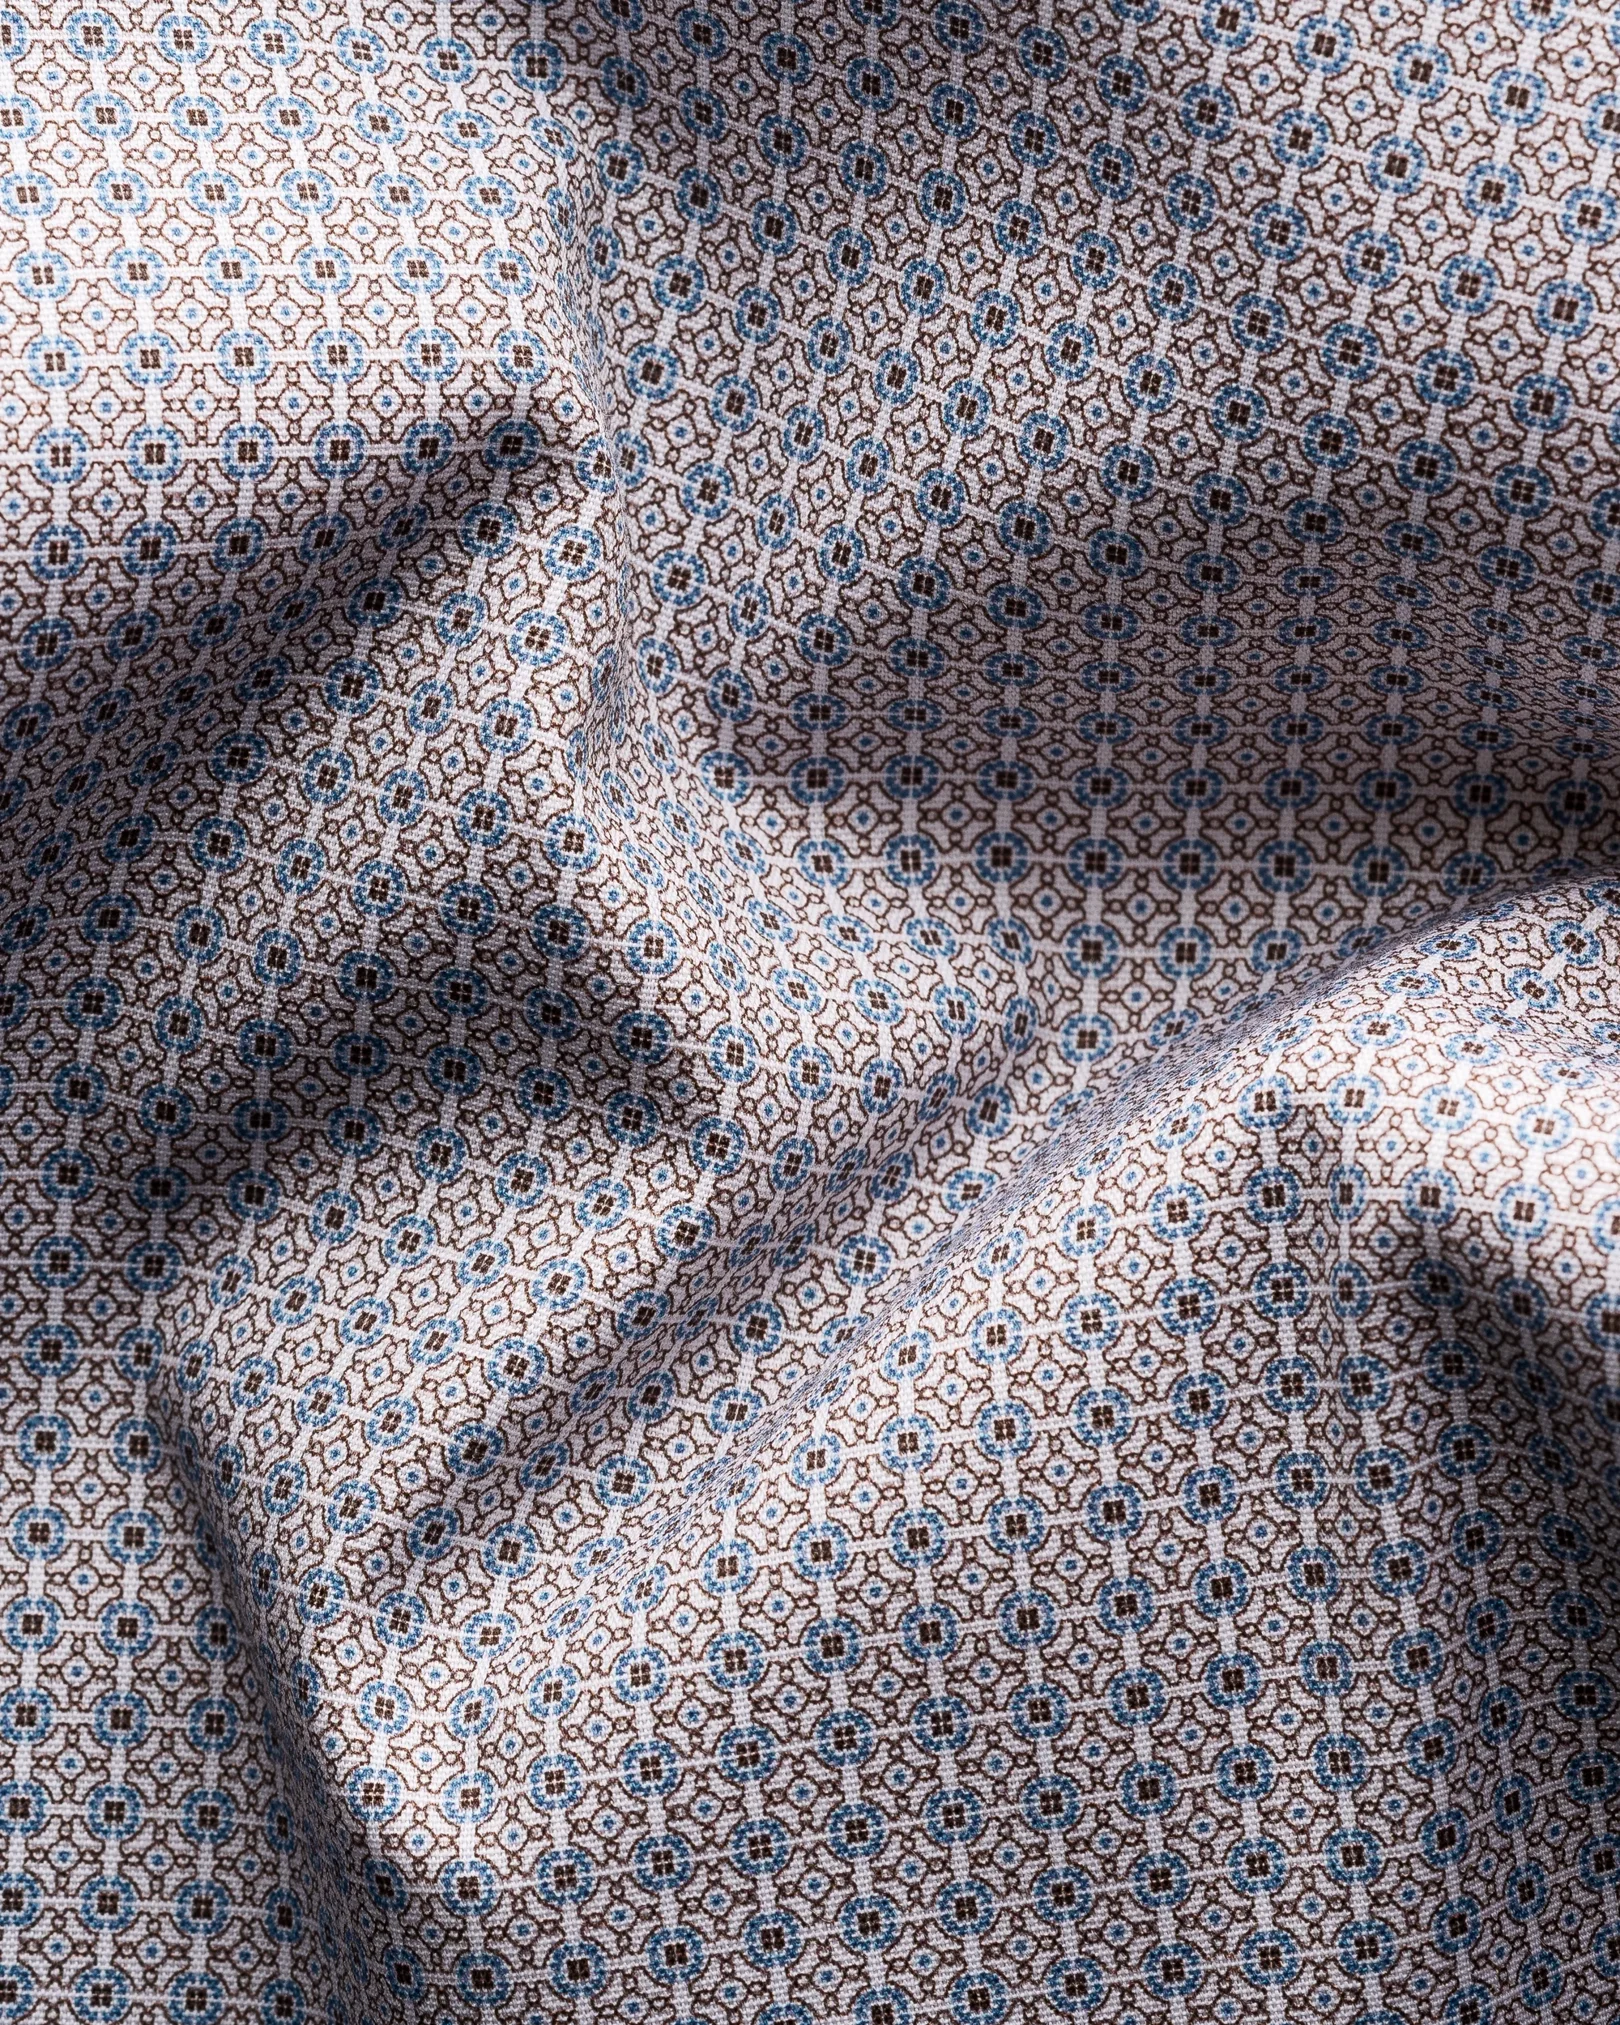 Eton - micro medallion print poplin shirt